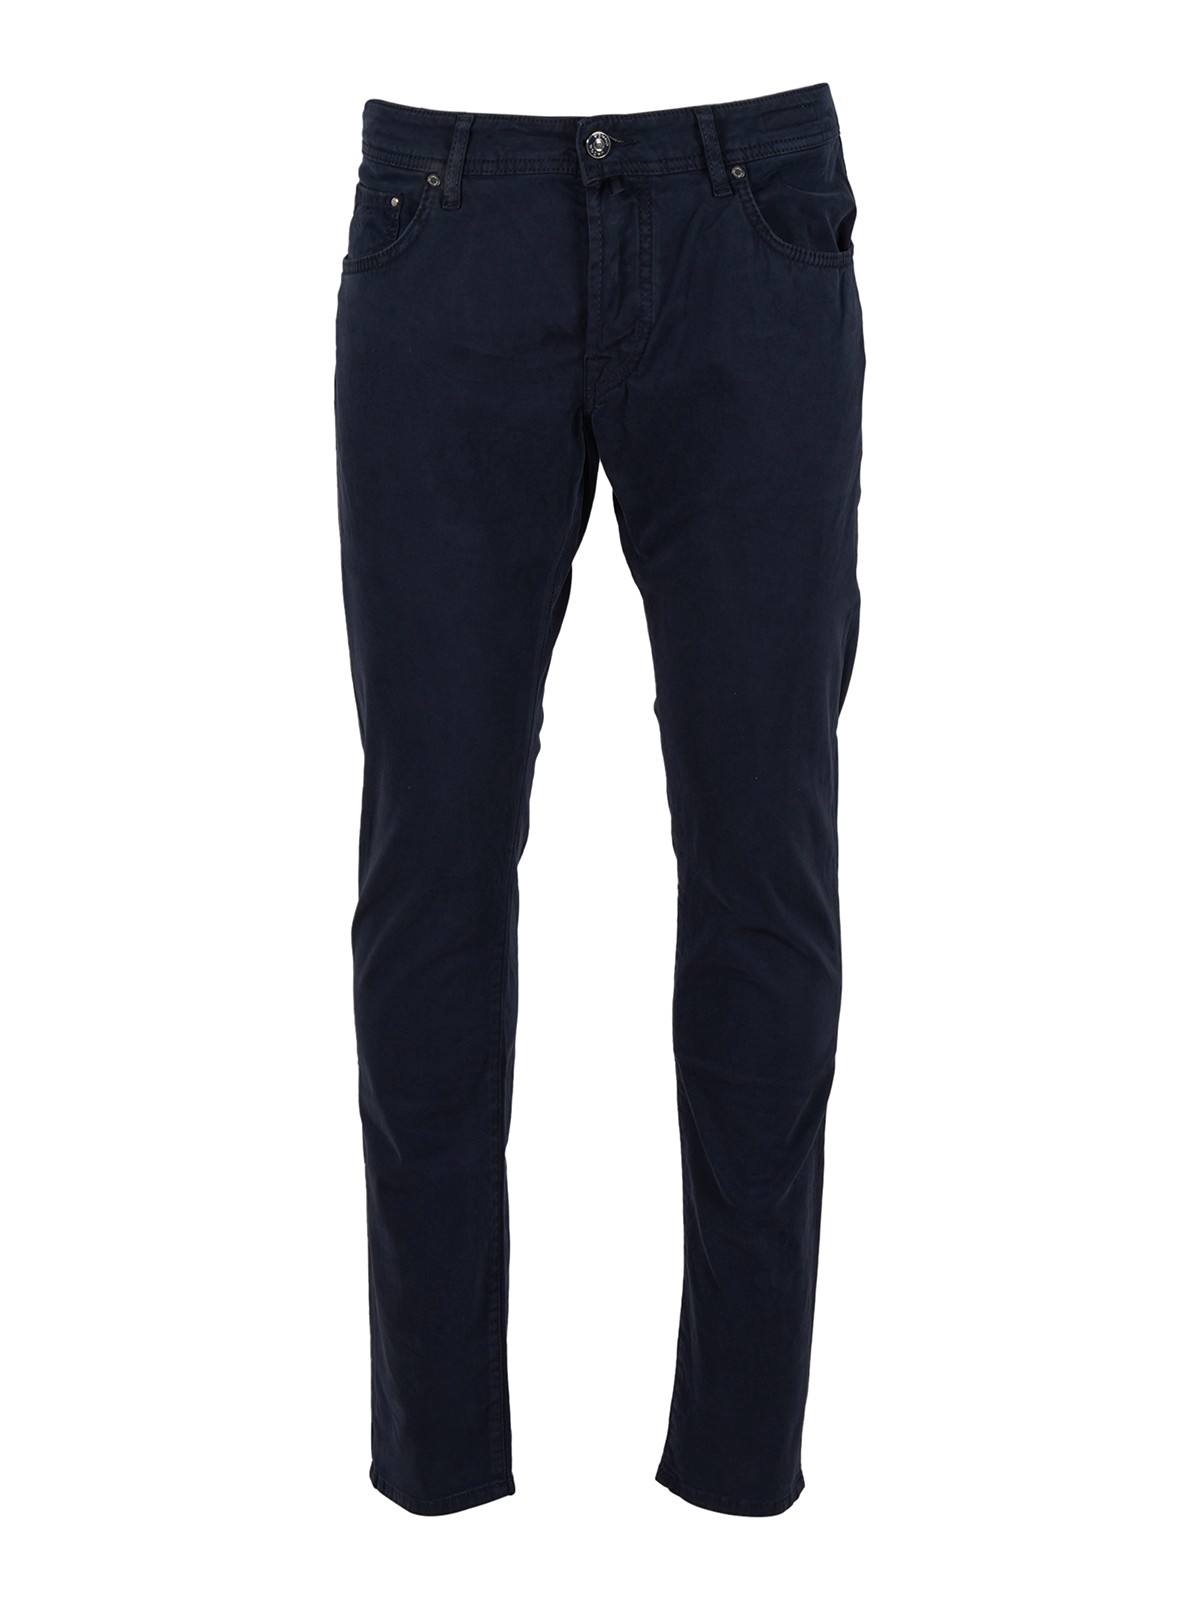 Skinny jeans Jacob Cohen - 5 slim nick pockets - UQM0701S3651Y99